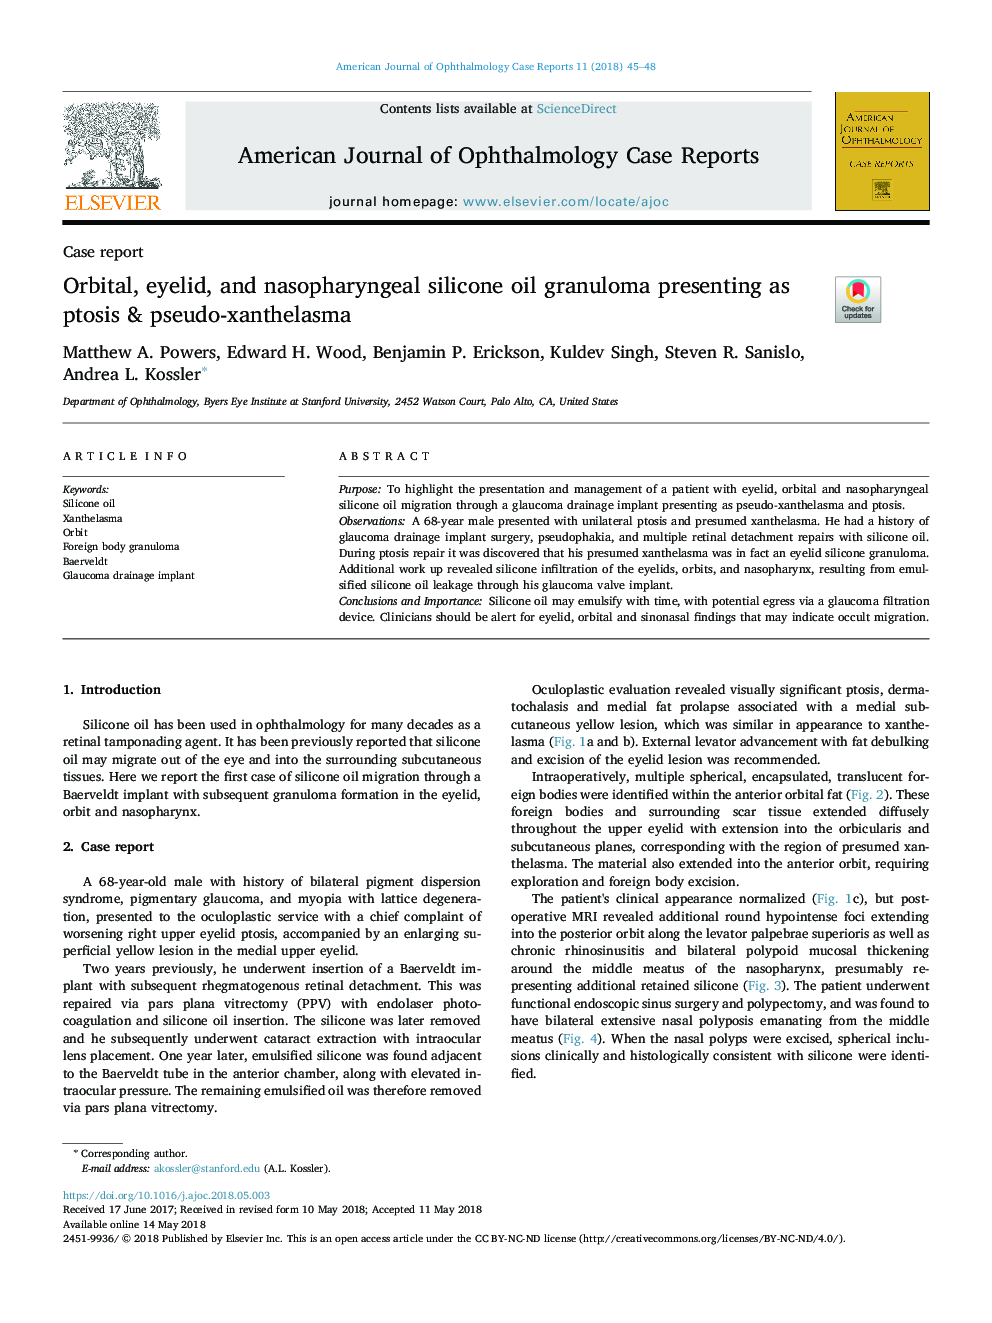 Orbital, eyelid, and nasopharyngeal silicone oil granuloma presenting as ptosis & pseudo-xanthelasma